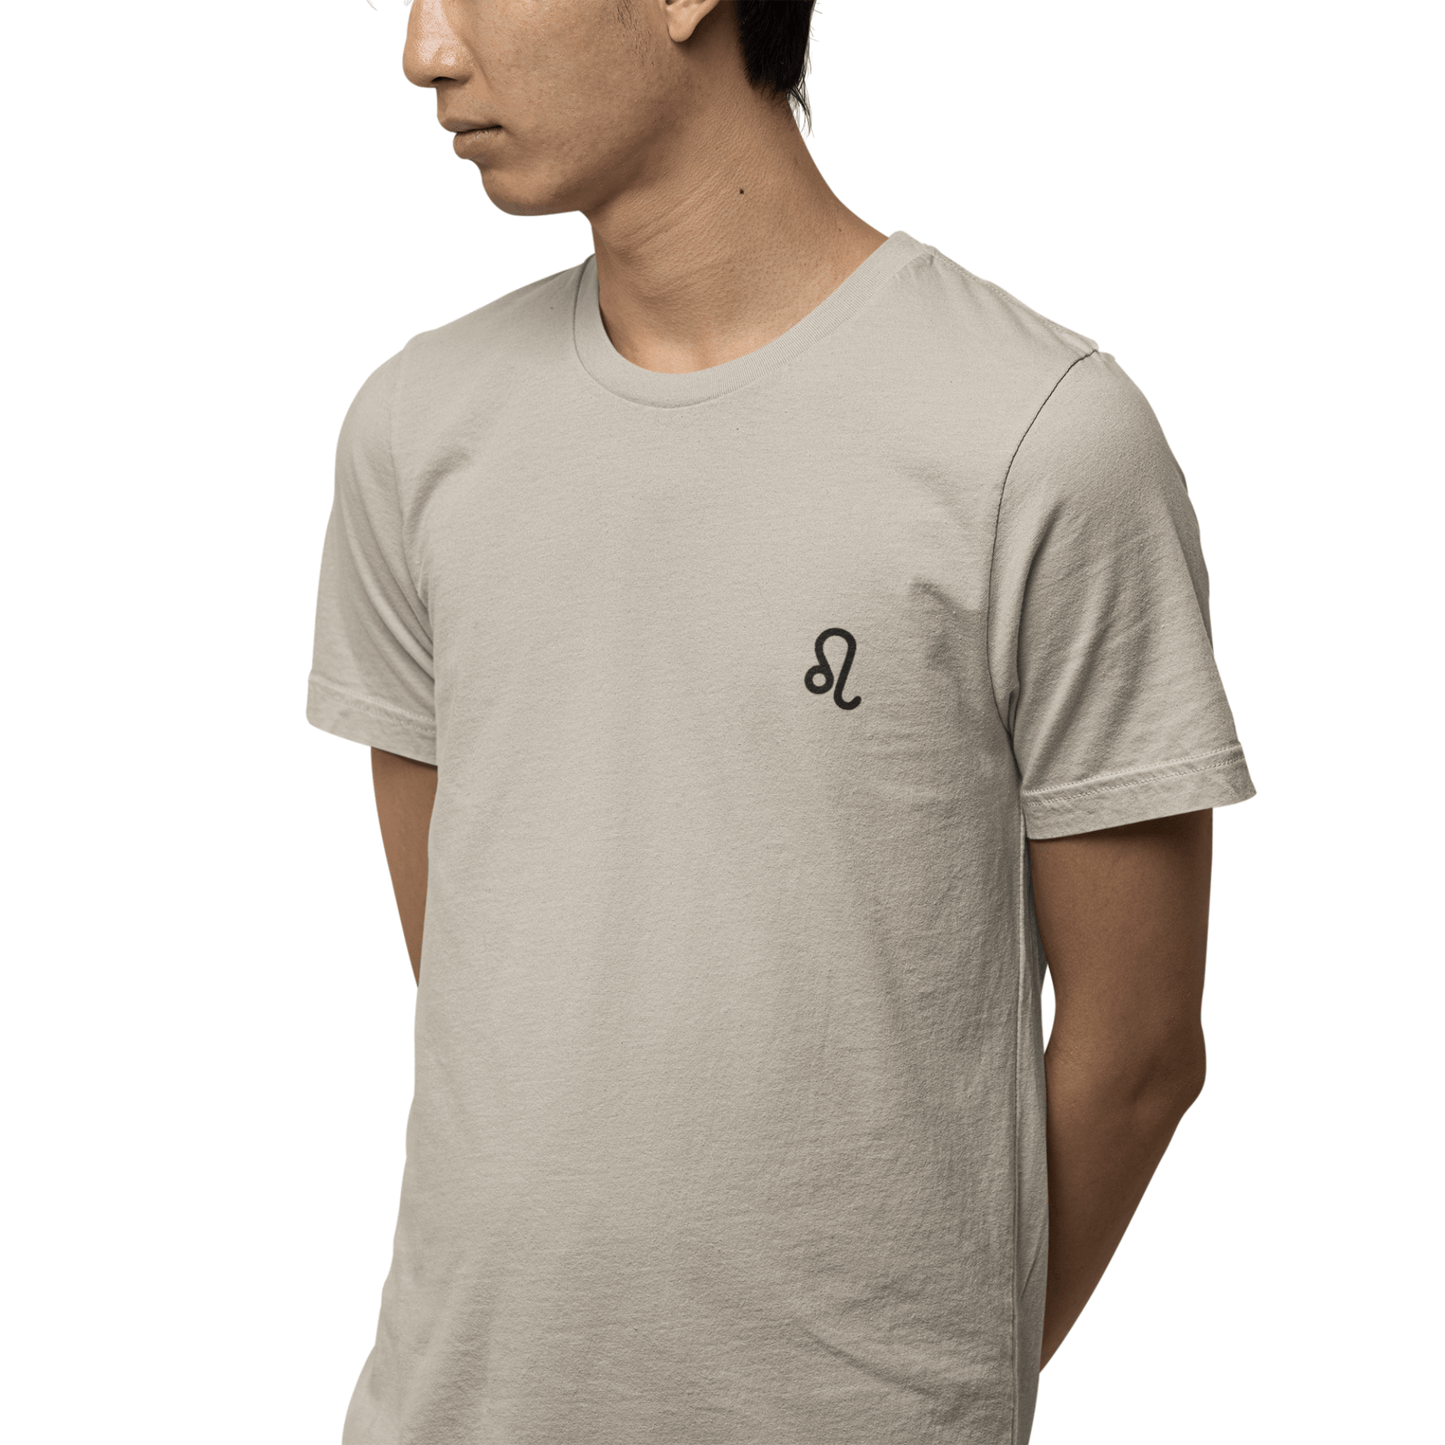 T-Shirt Leo Minimalist Majesty T-Shirt: Bold Elegance for the Zodiac King